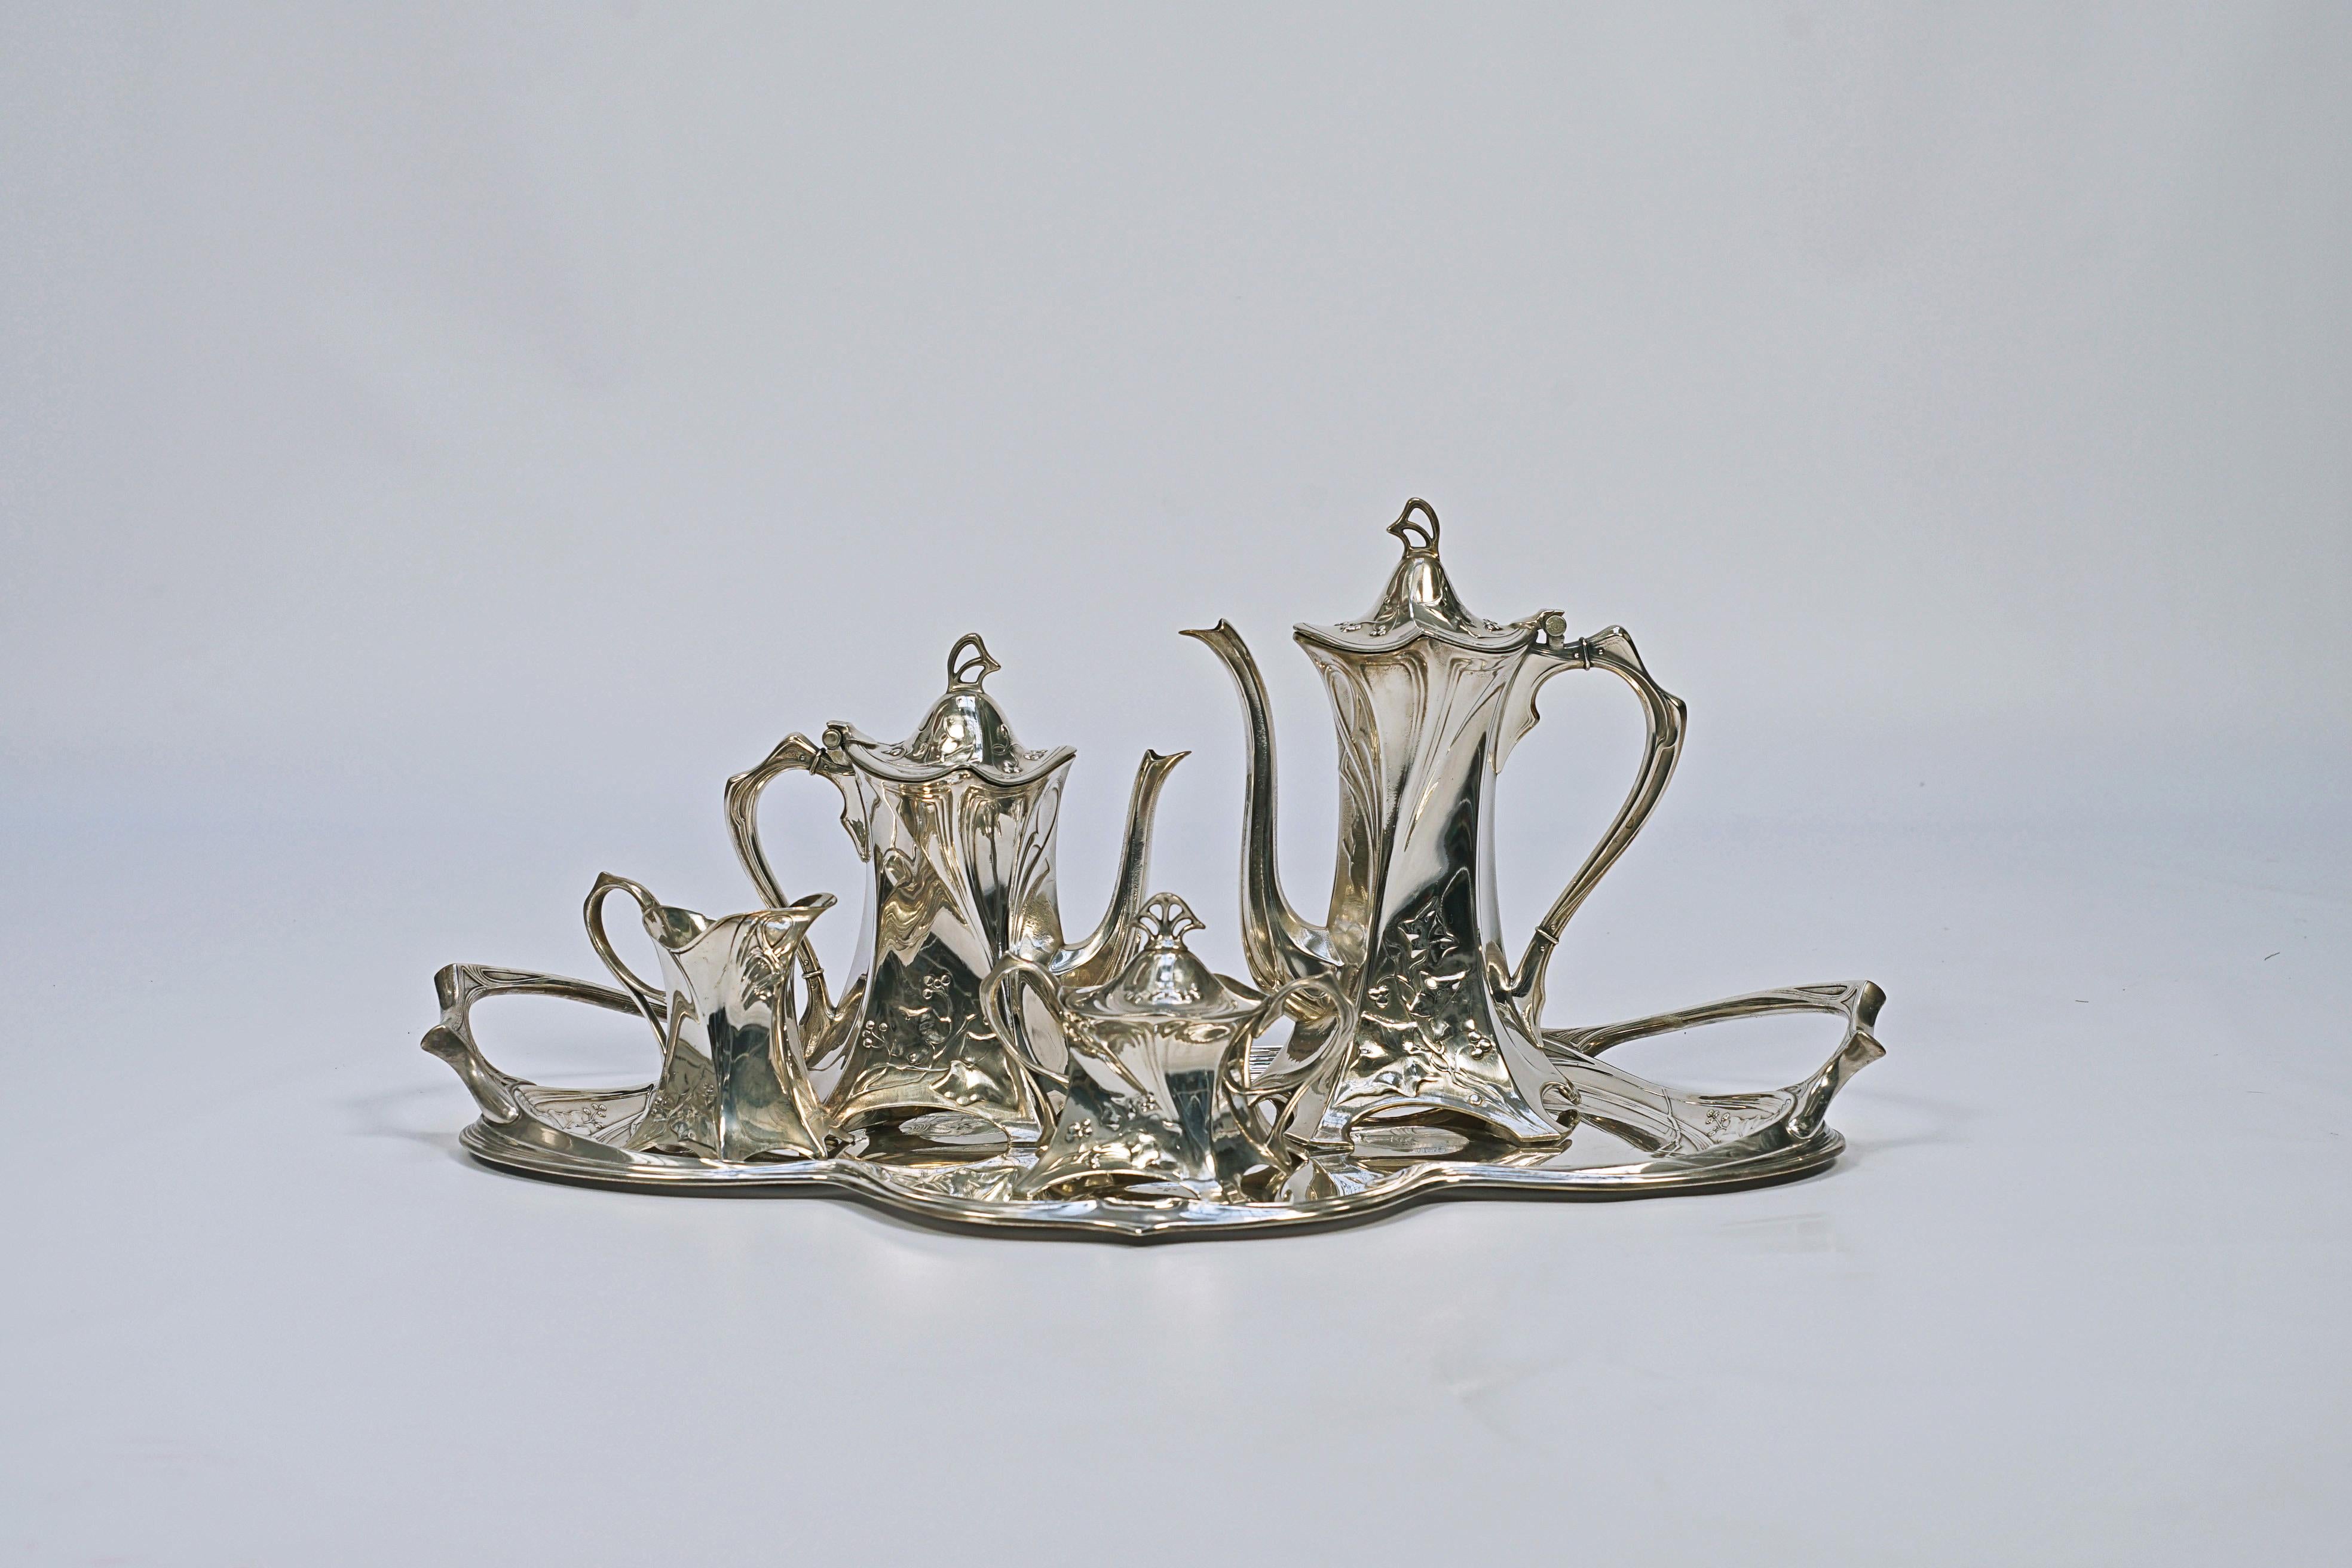 5-piece tea set made of silver-plated bronze. Made by the WMF-Württembergische Metallwarenfabrik factory (1853 to the present).

Graham Dry (1906), “Art Nouveau Domestic Metalwork, from Wurttembergische Mettalwsarenfabrick”, Antique Collectors